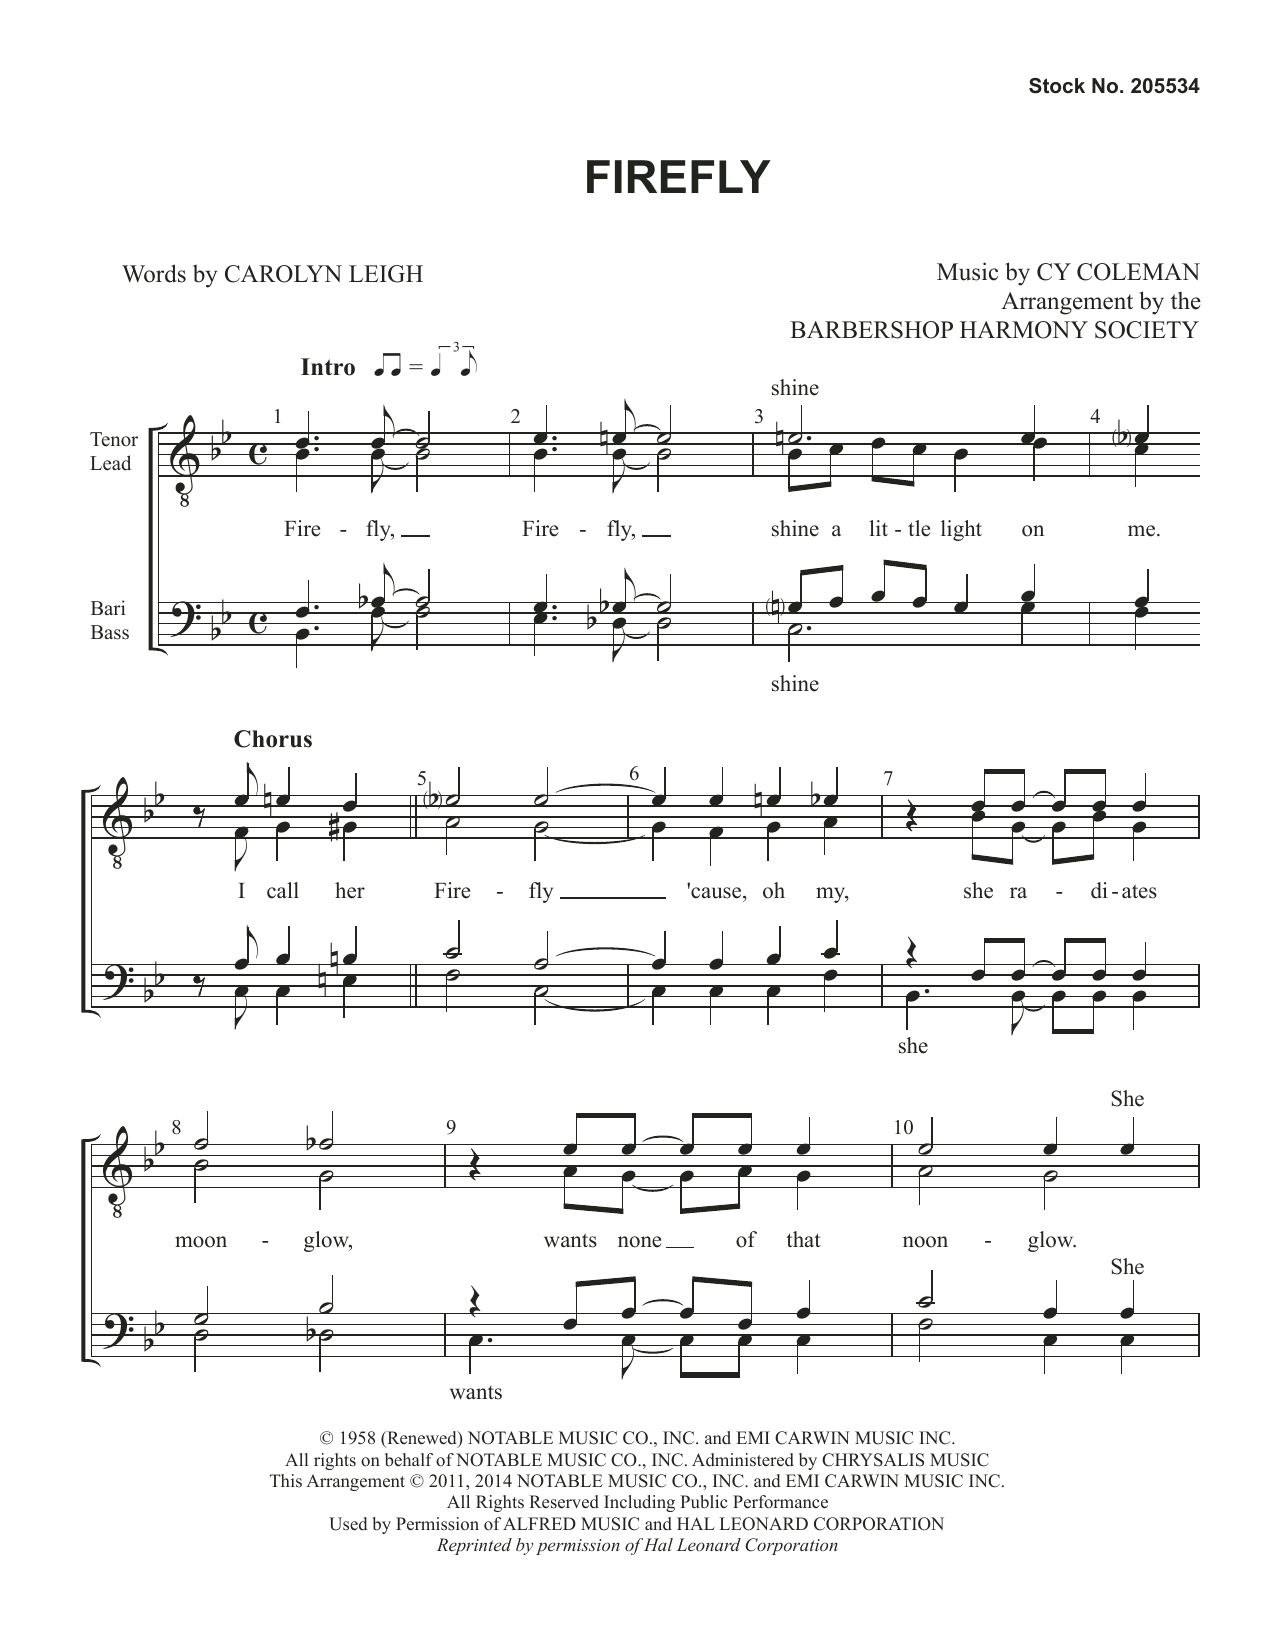 Tony Bennett Firefly (arr. Barbershop Harmony Society) Sheet Music Notes & Chords for TTBB Choir - Download or Print PDF